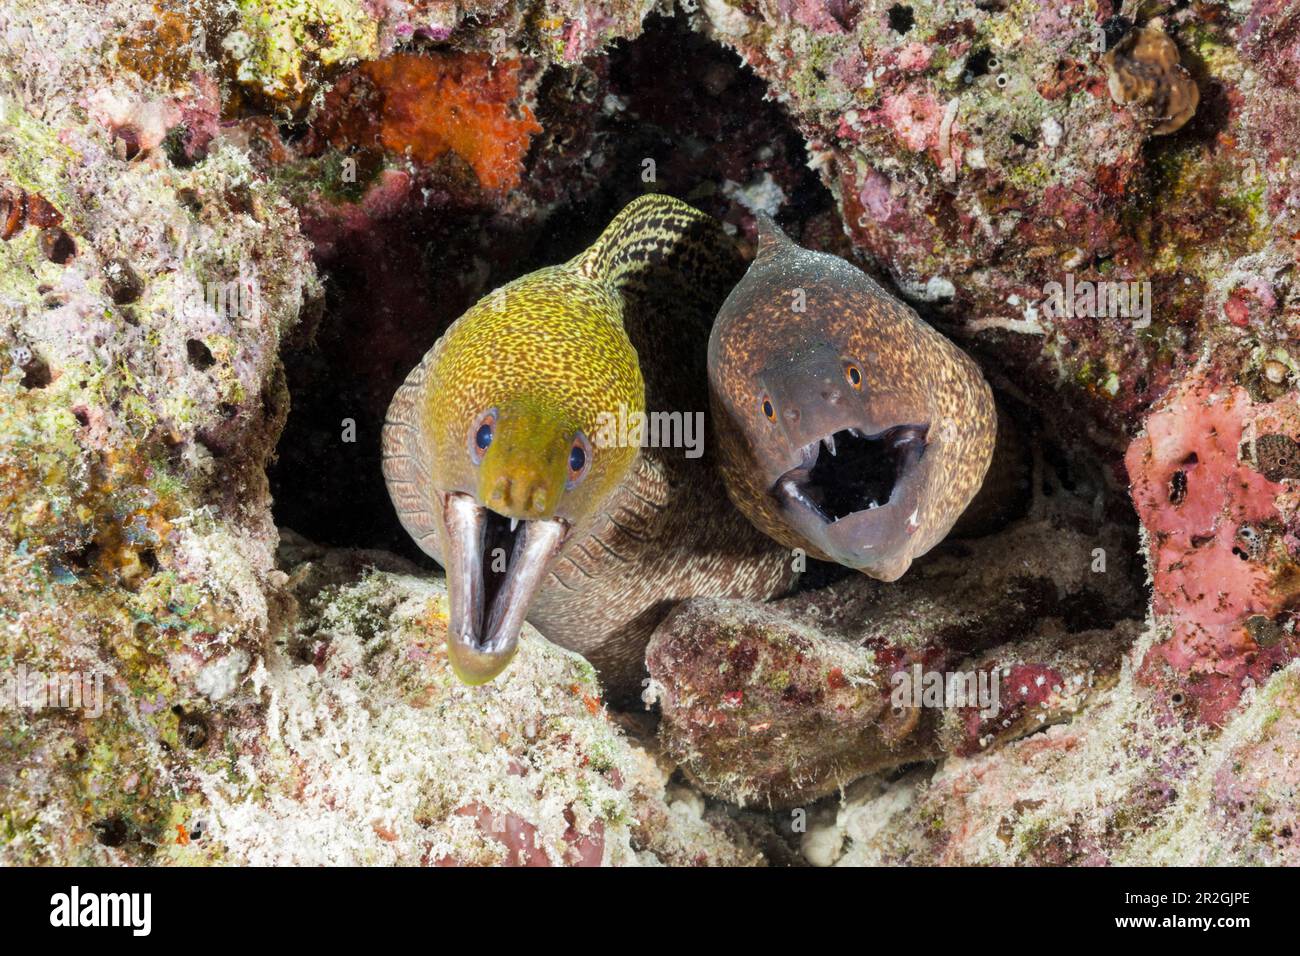 Anguilla morena gialla e anguilla morena gigante, Gymnothorax flavimarginatus, Gymnothorax javanicus, Atollo maschio del Nord, Oceano Indiano, Maldive Foto Stock